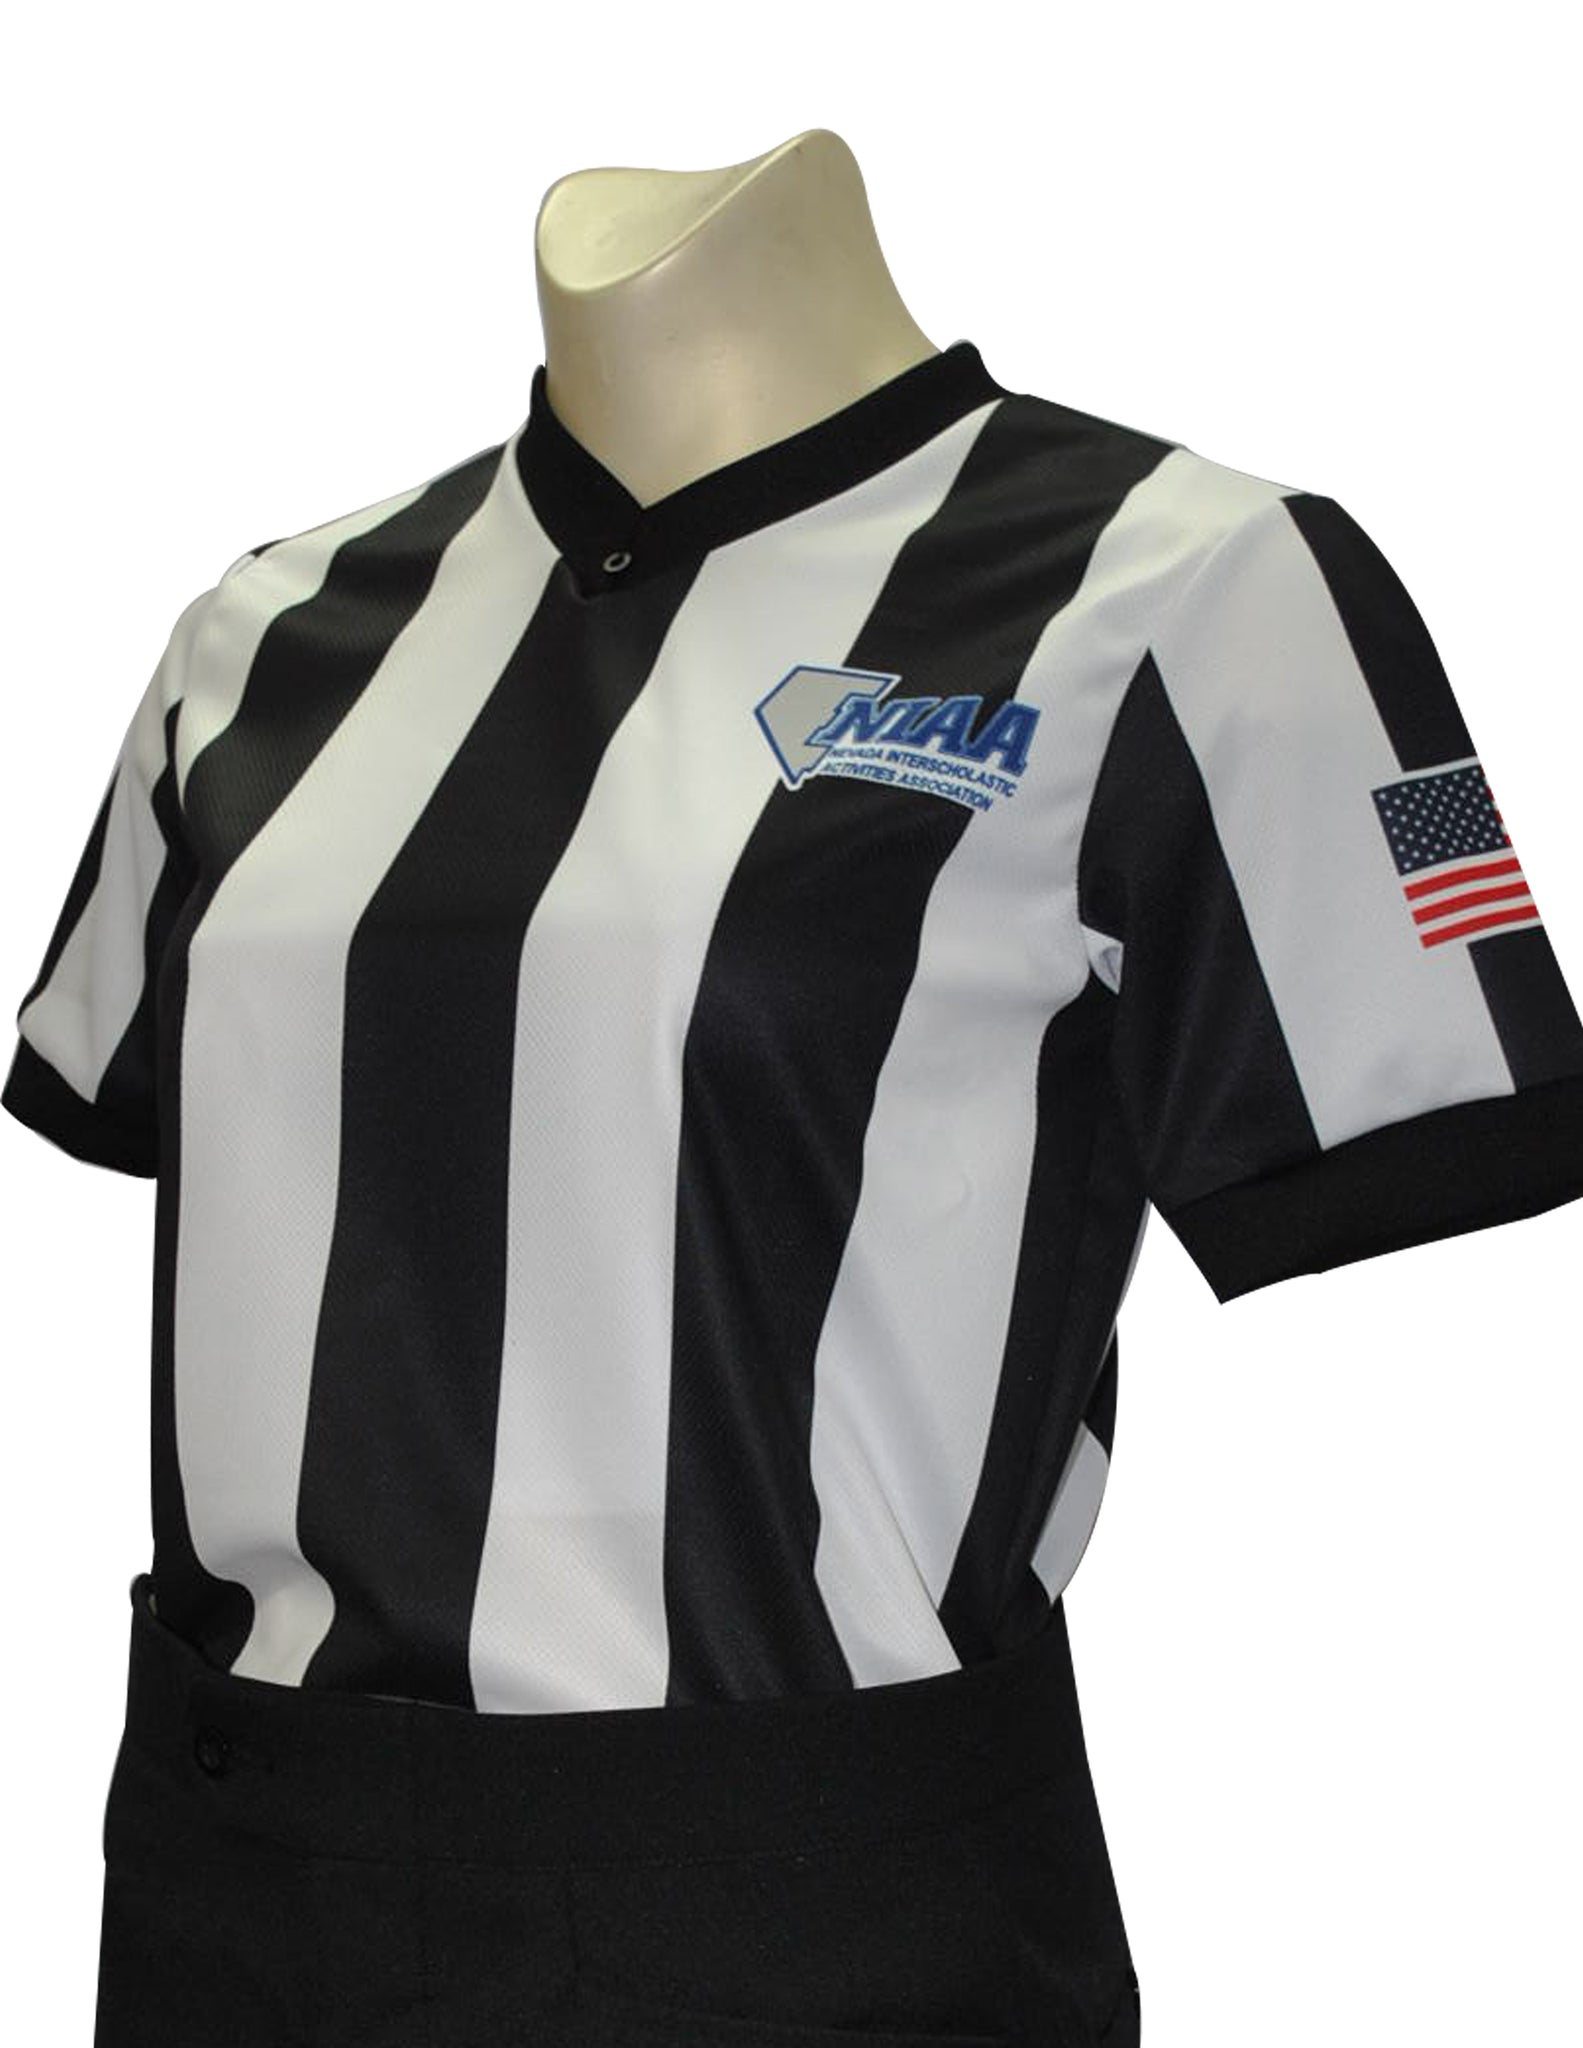 USA239NV-607 - Smitty "Made in USA" - "BODY FLEX" Basketball Women's Short Sleeve Shirt